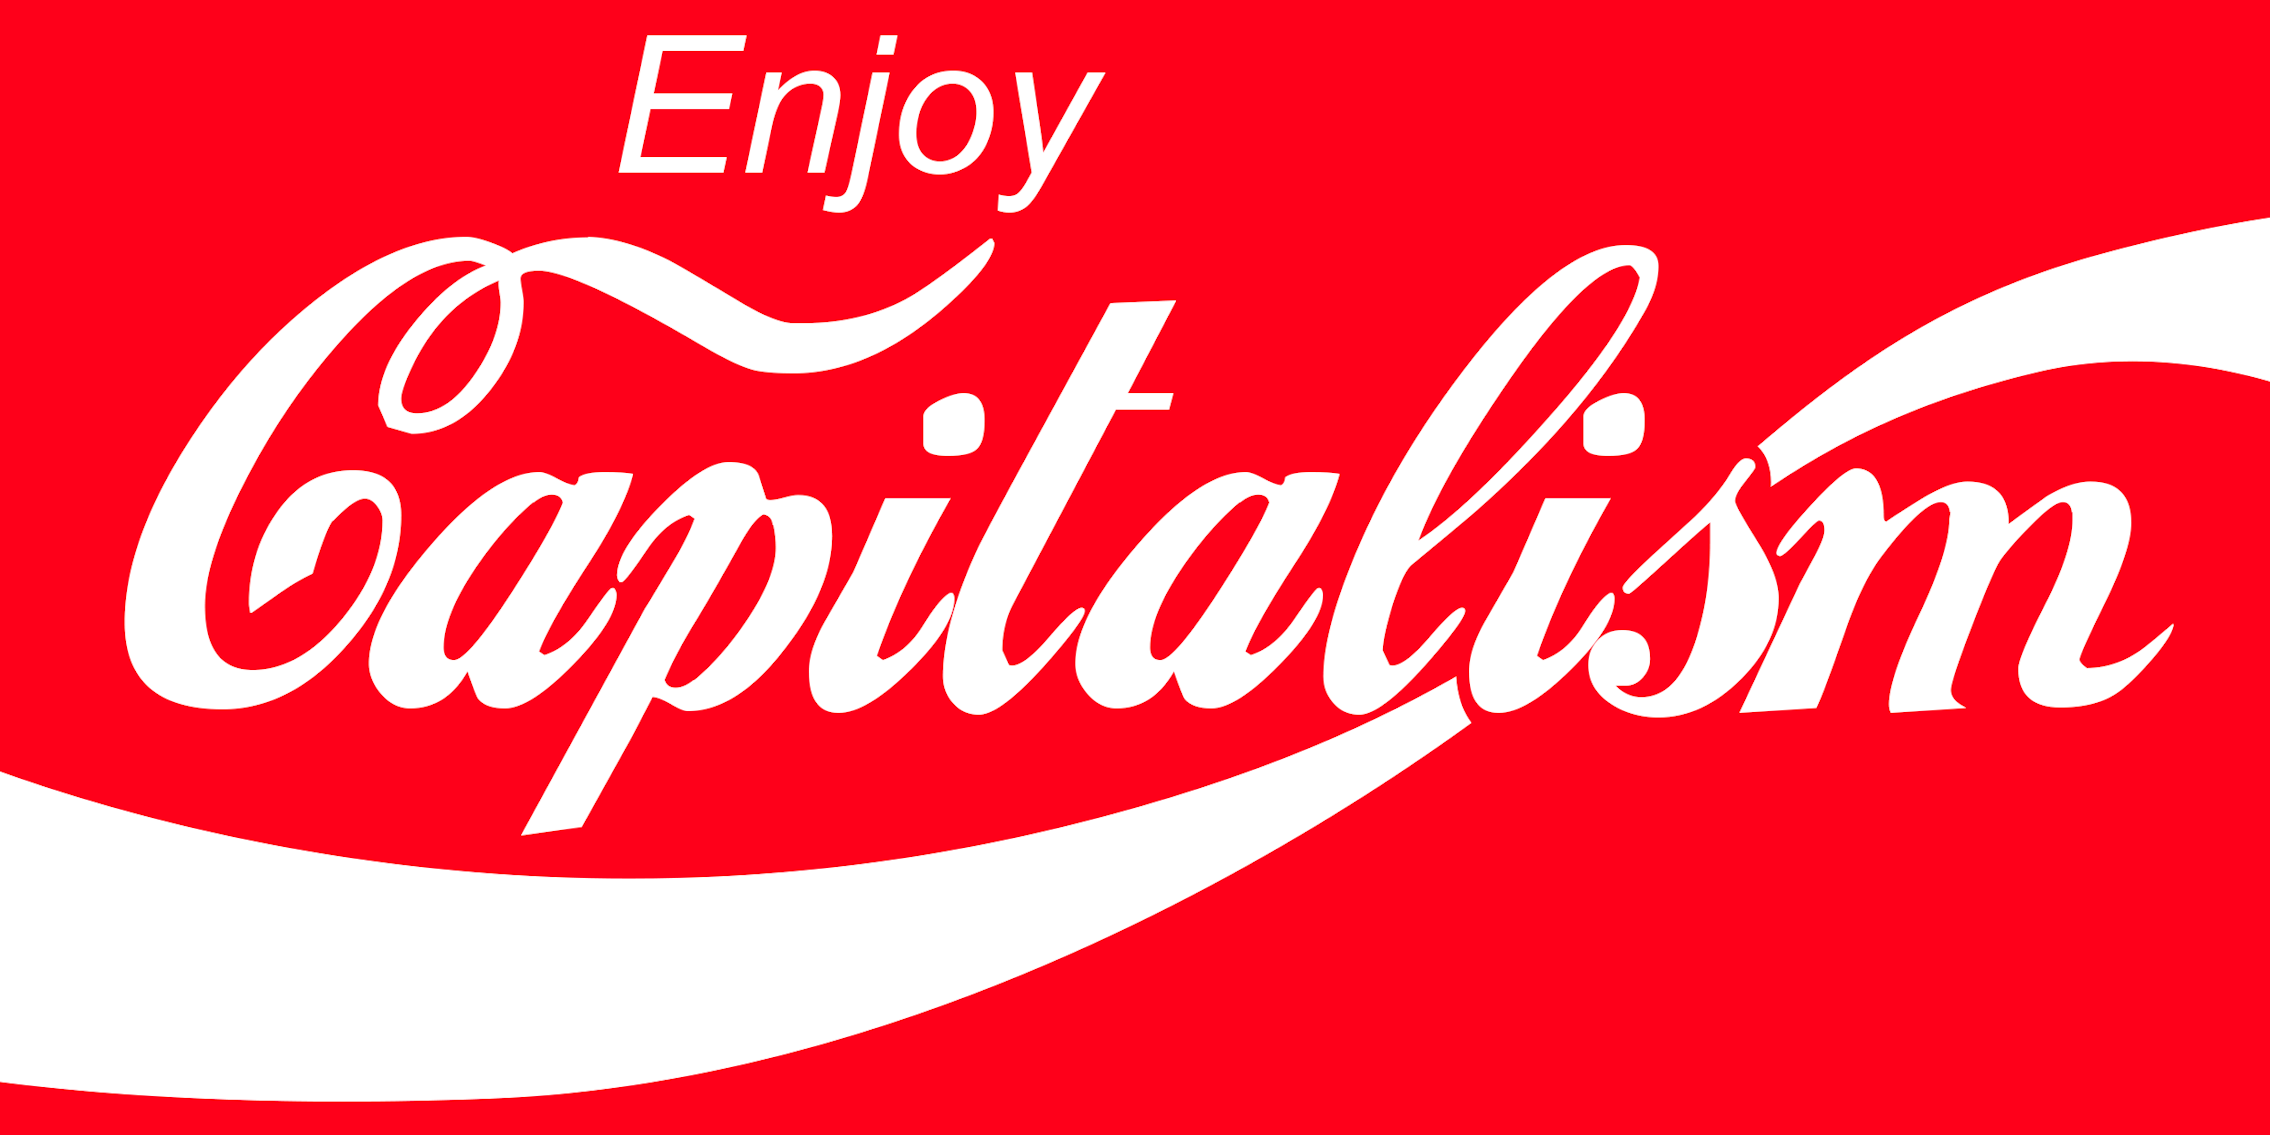 'enjoy capitalism' mockup of Coca-Cola logo